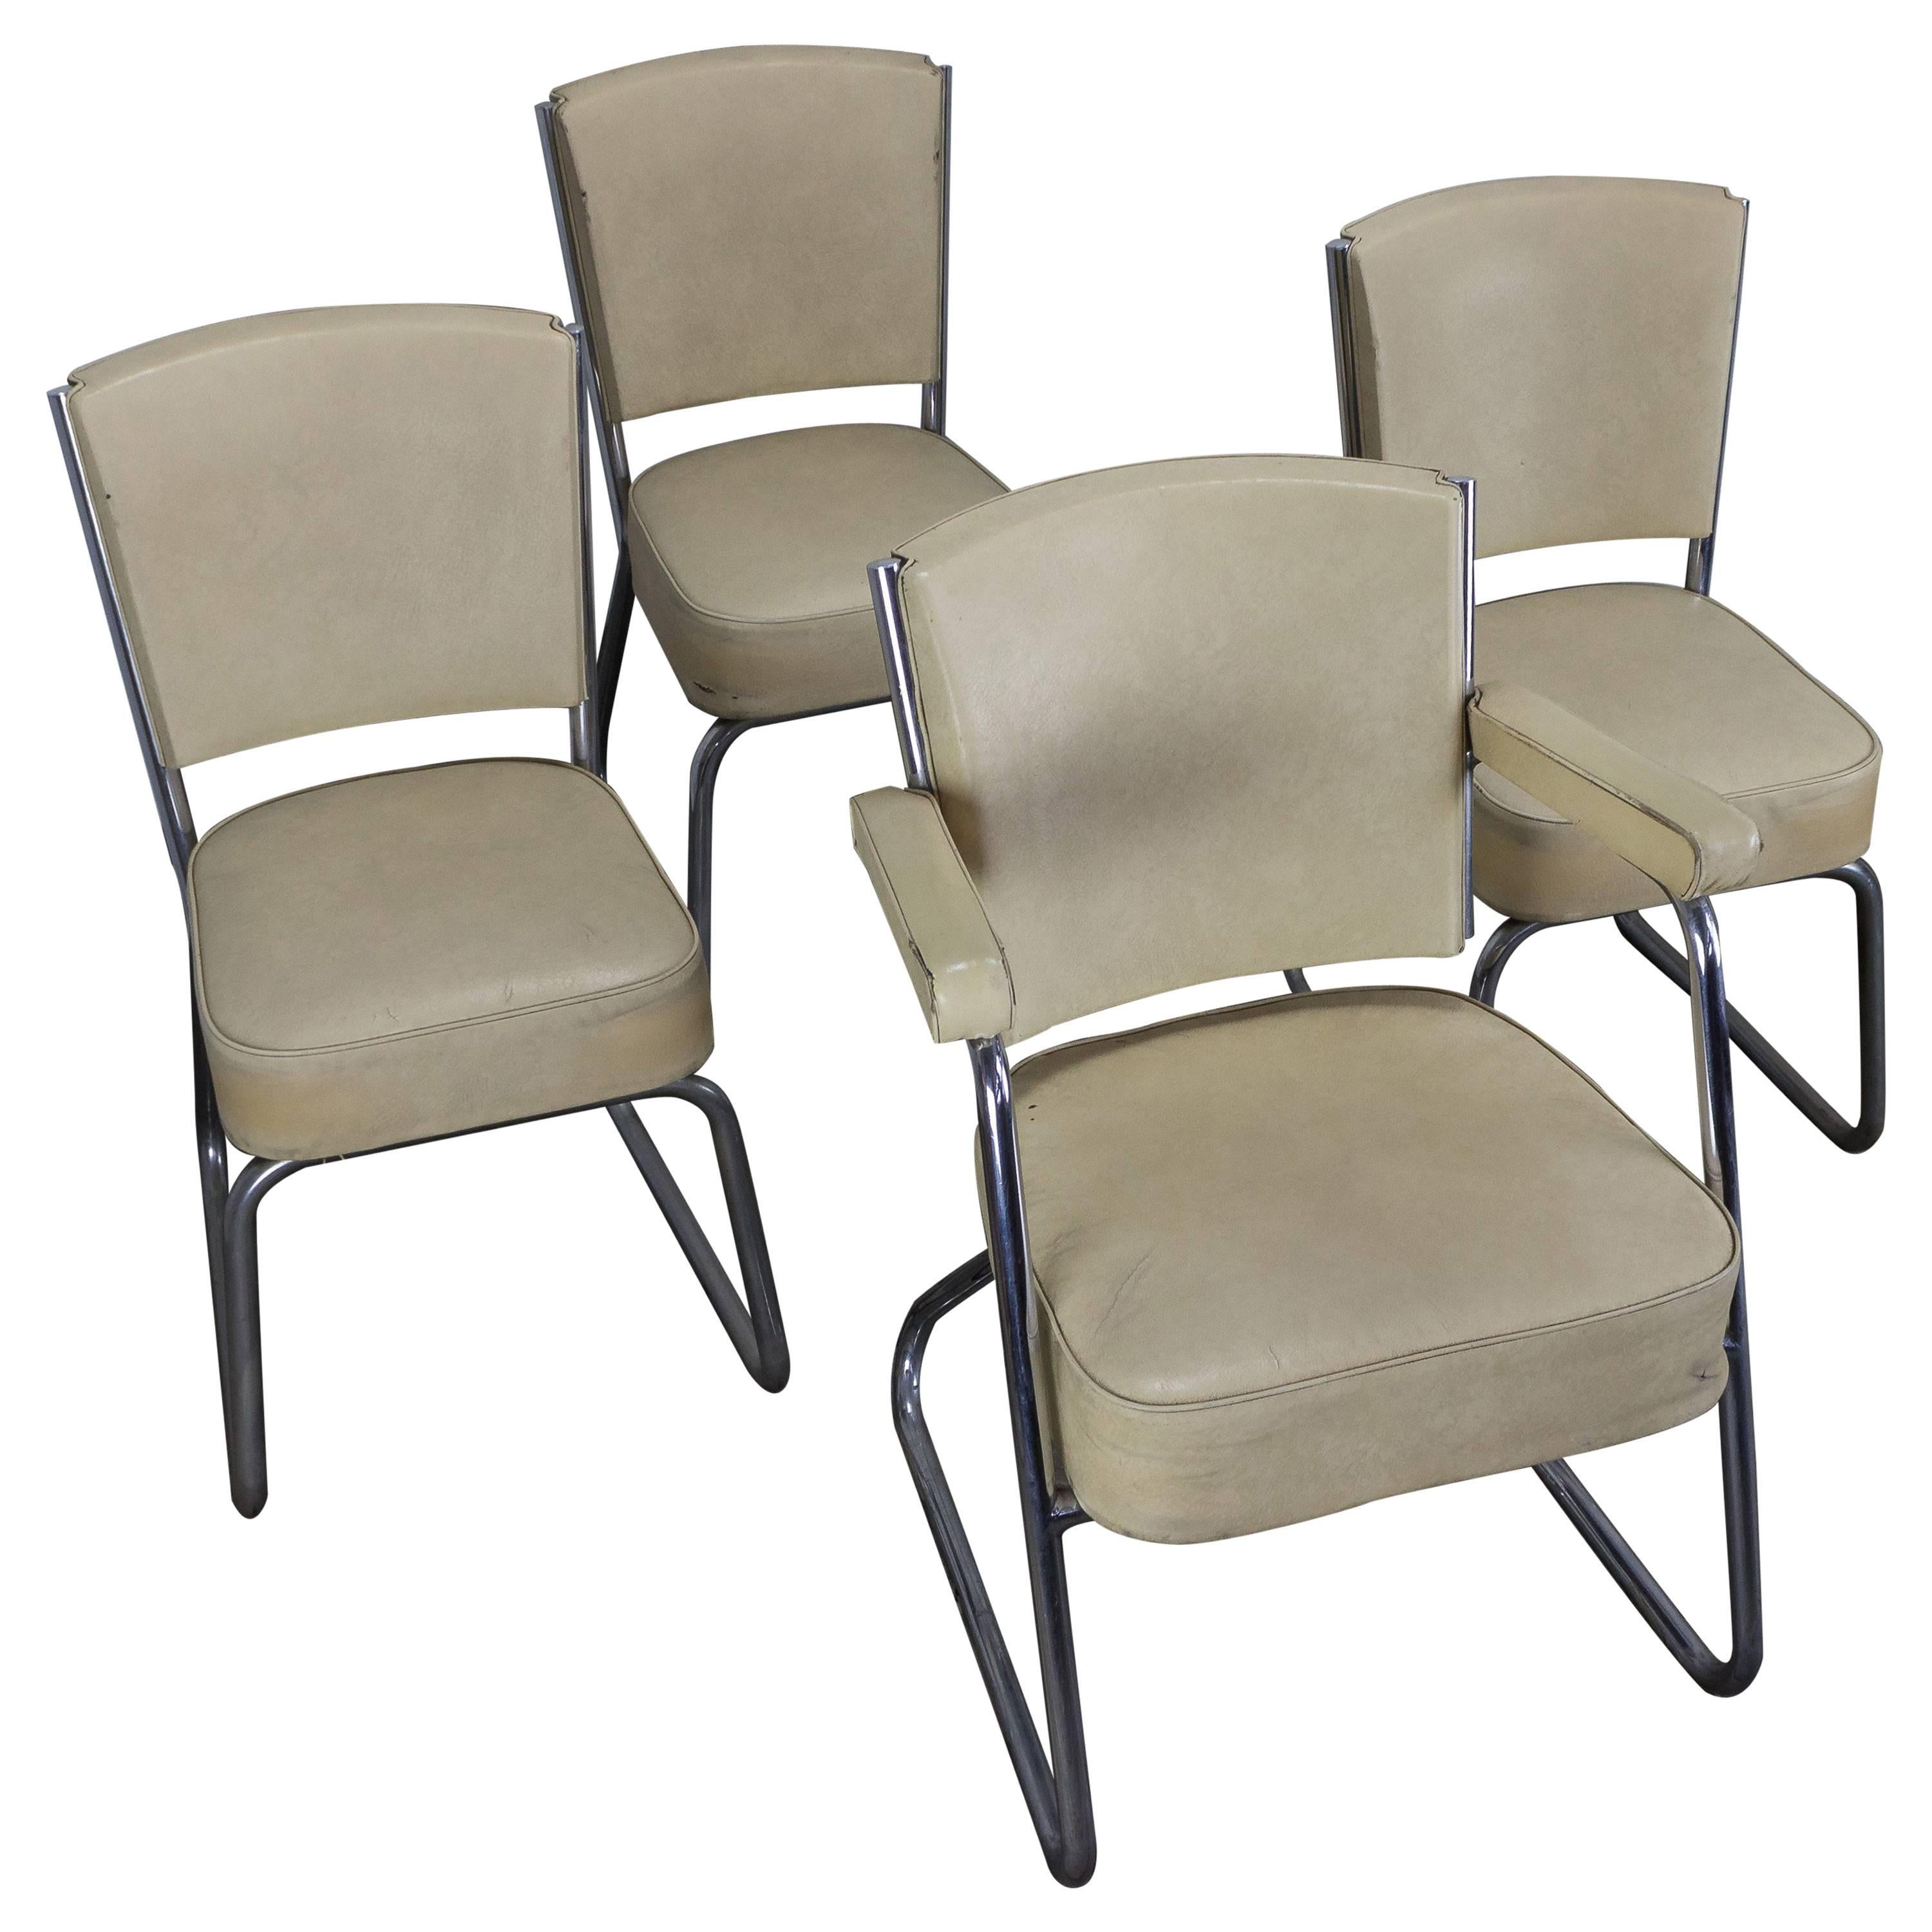 Set of Four Mid Century Chrome-Plated Tubular Chairs